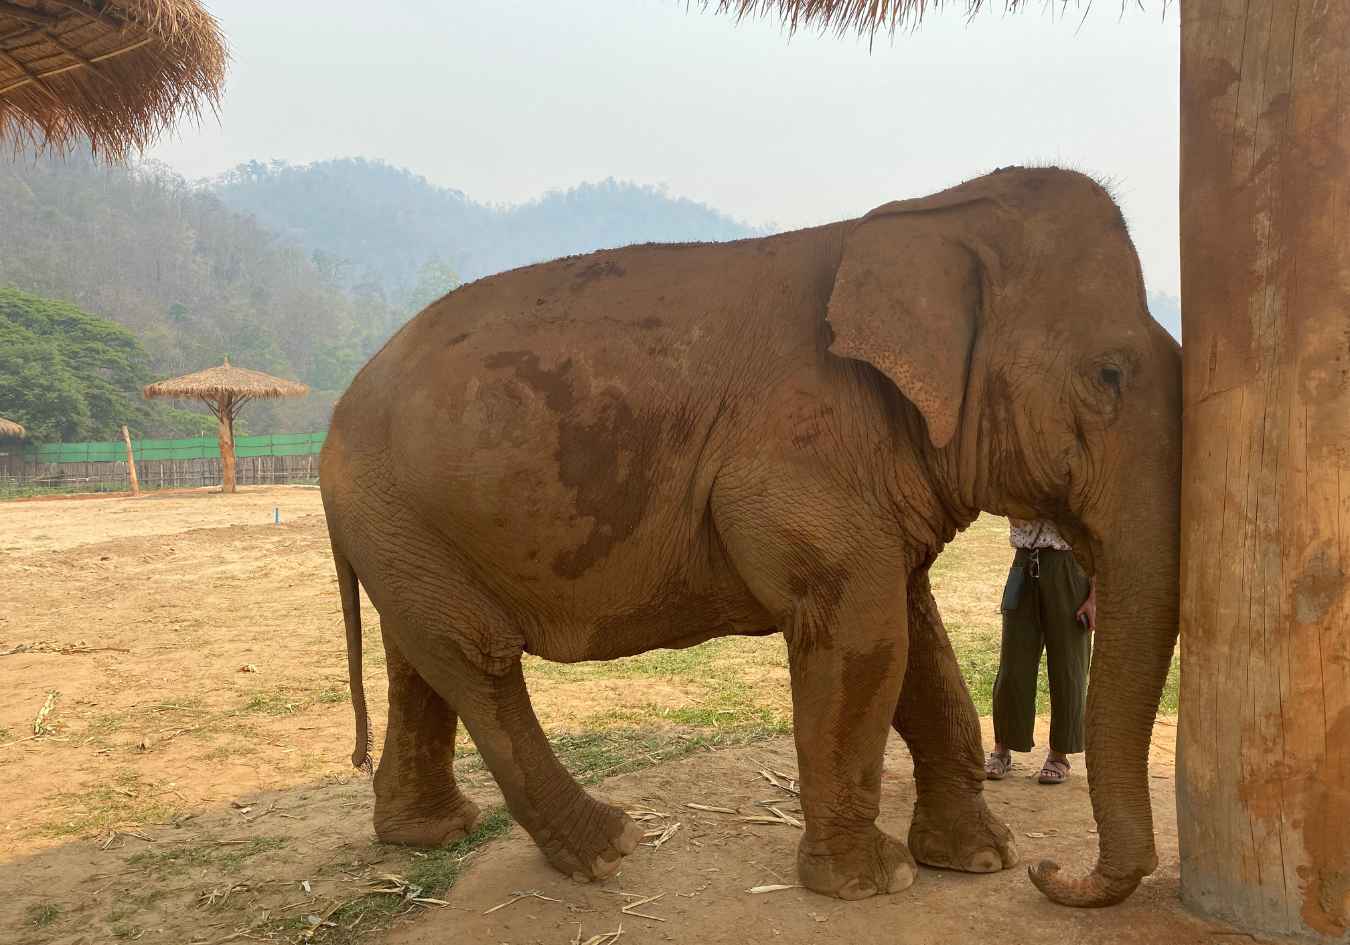 An elephant at the Elephant Nature Park